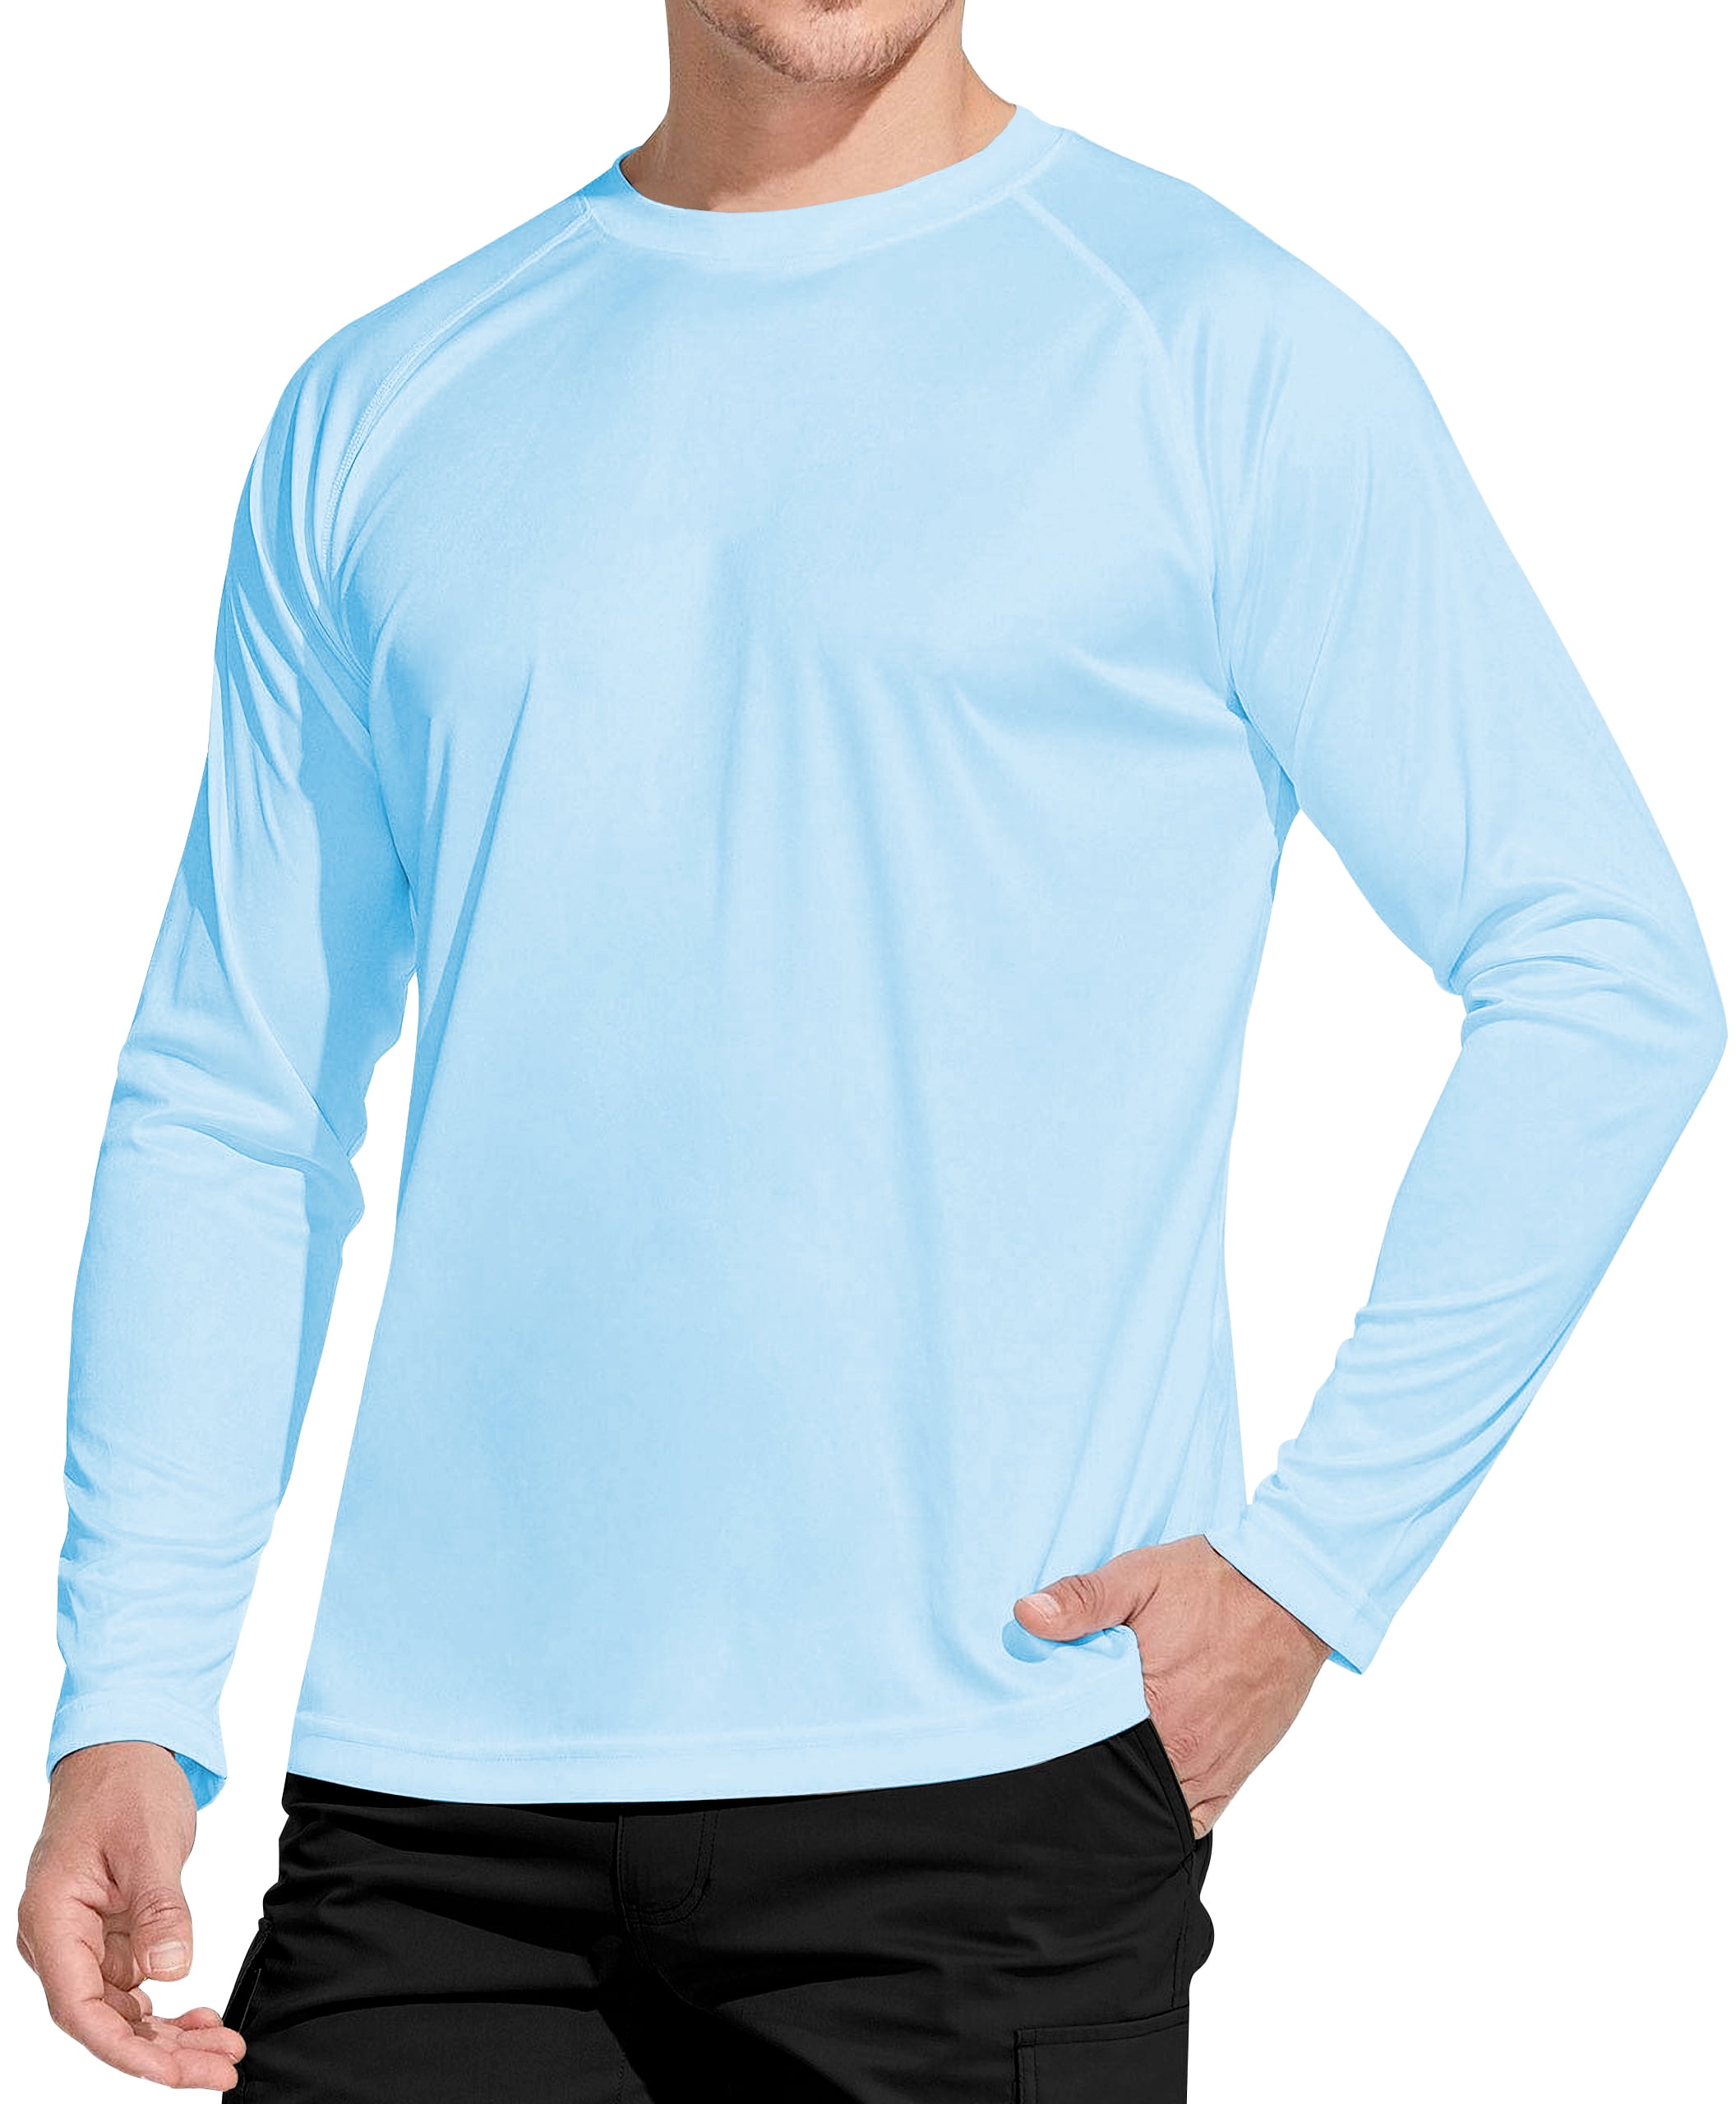 WELIGU Men's Long Sleeve Shirts Lightweight UPF 50+ T-Shirts Fishing White  Male Size L 